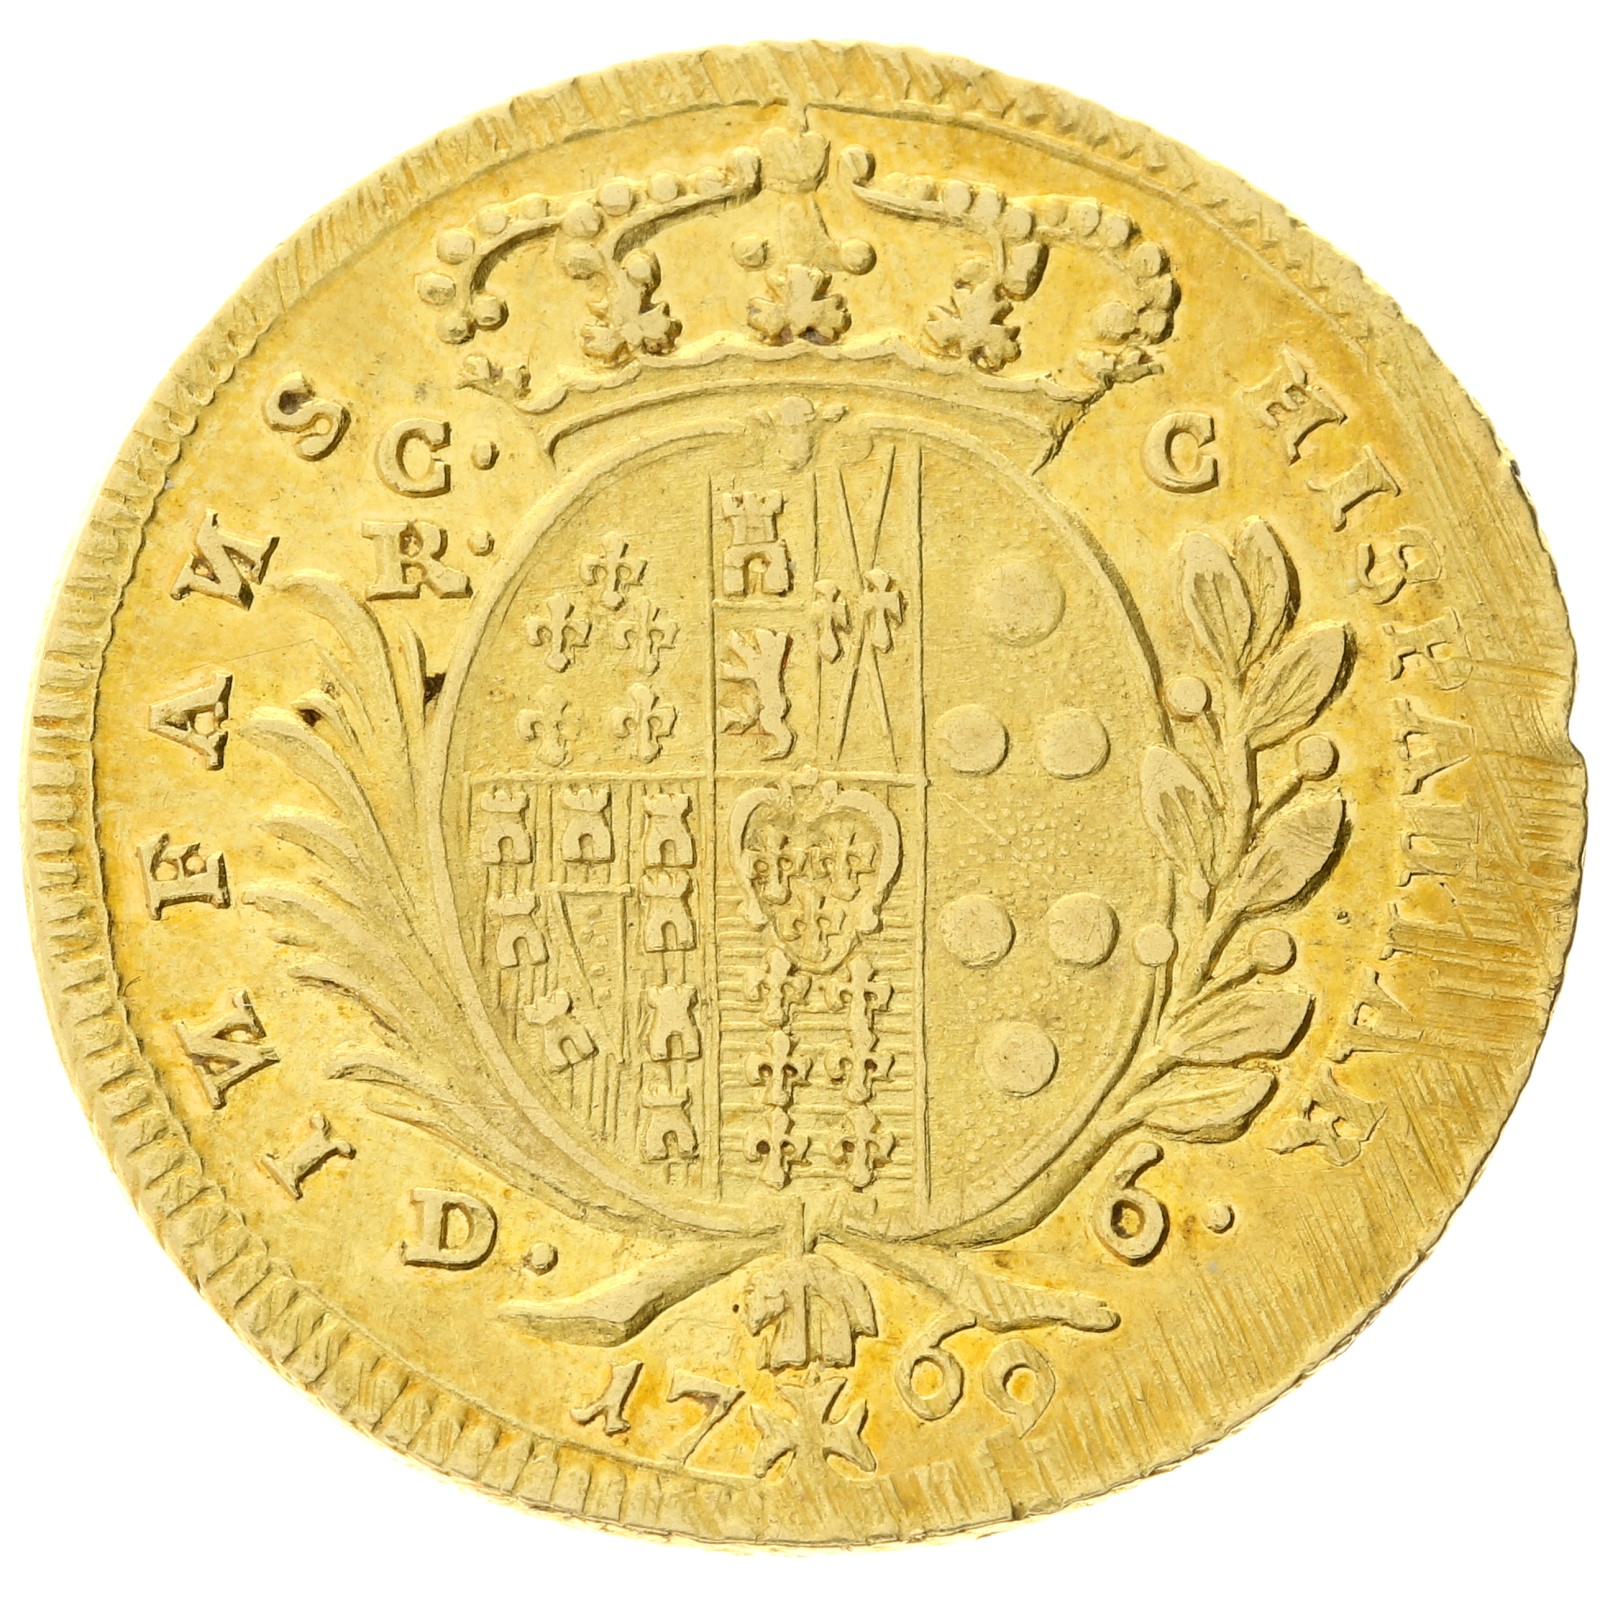 Italy - 6 ducats - 1769 - Ferdinando IV